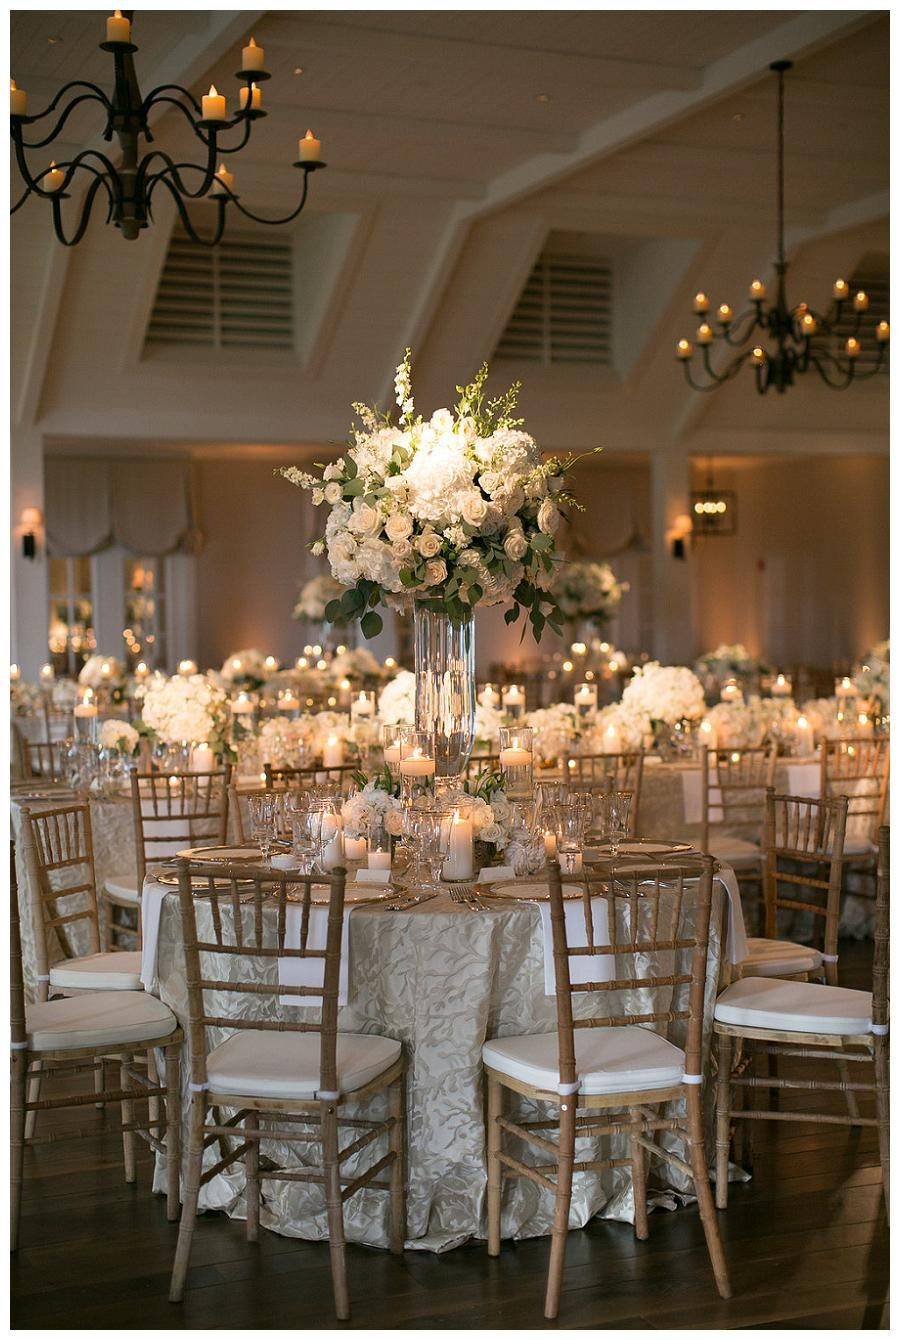 White Wedding Decorations
 Gold ivory and white wedding reception decor with white